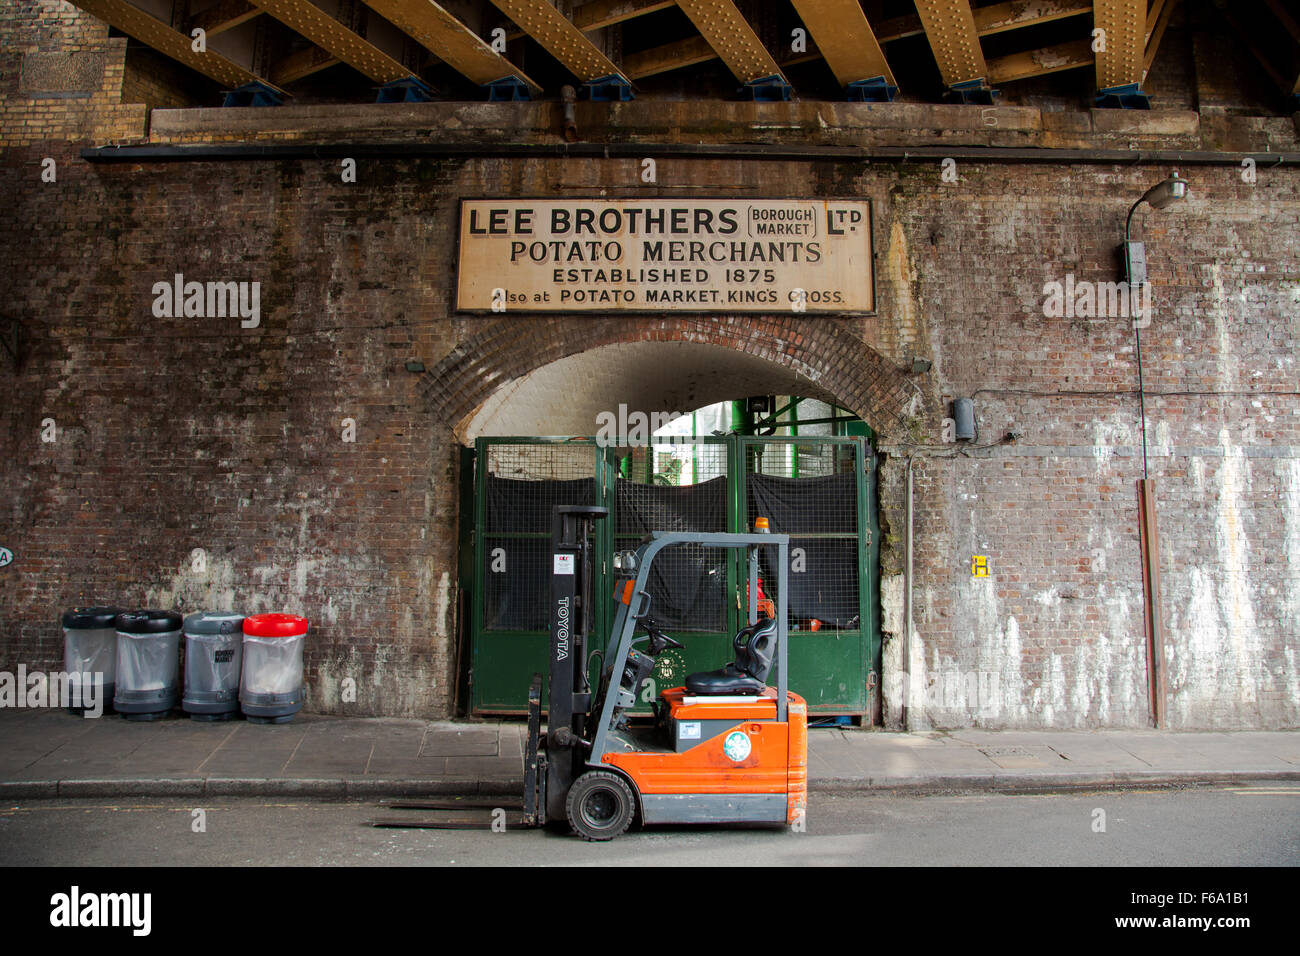 Lee Brothers Potato Merchants, Borough Market, London, England,  Stock  Photo - Alamy